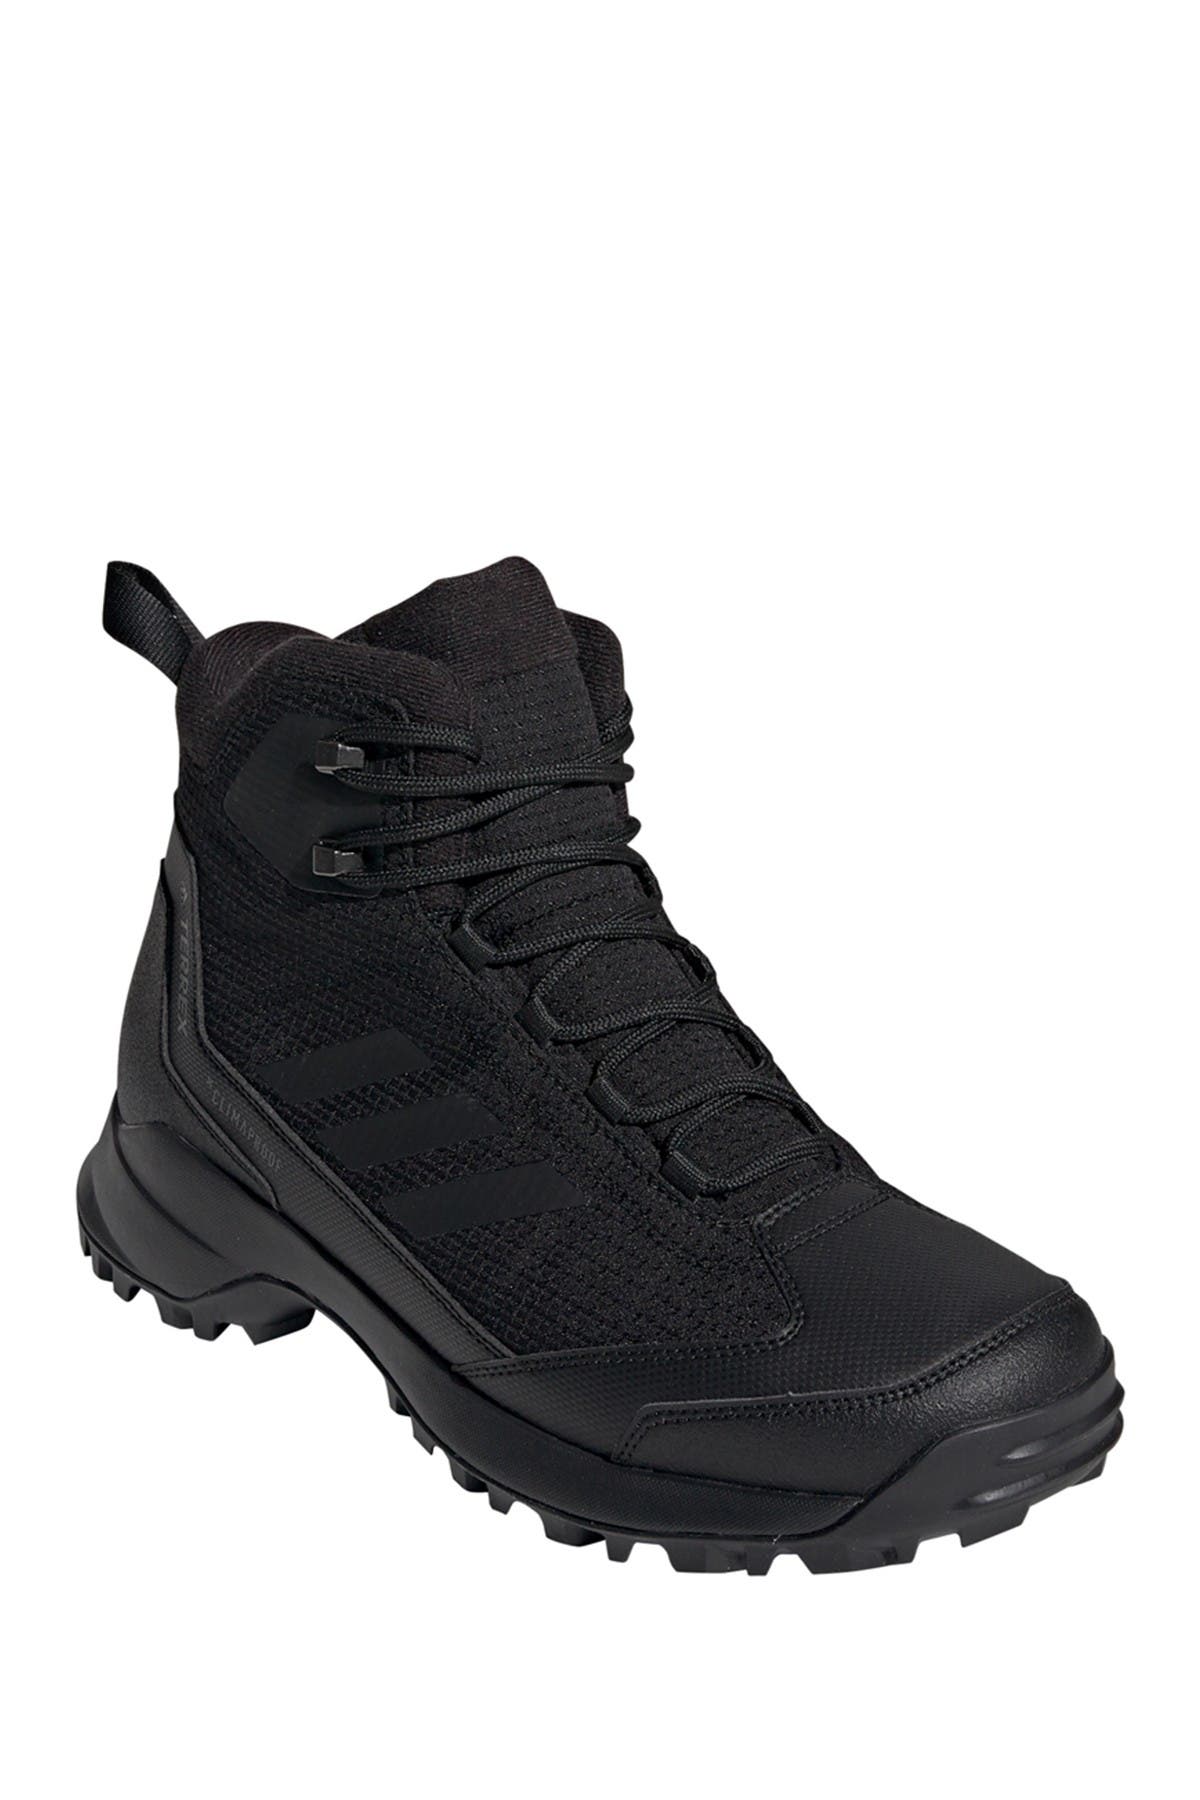 adidas hiking boots